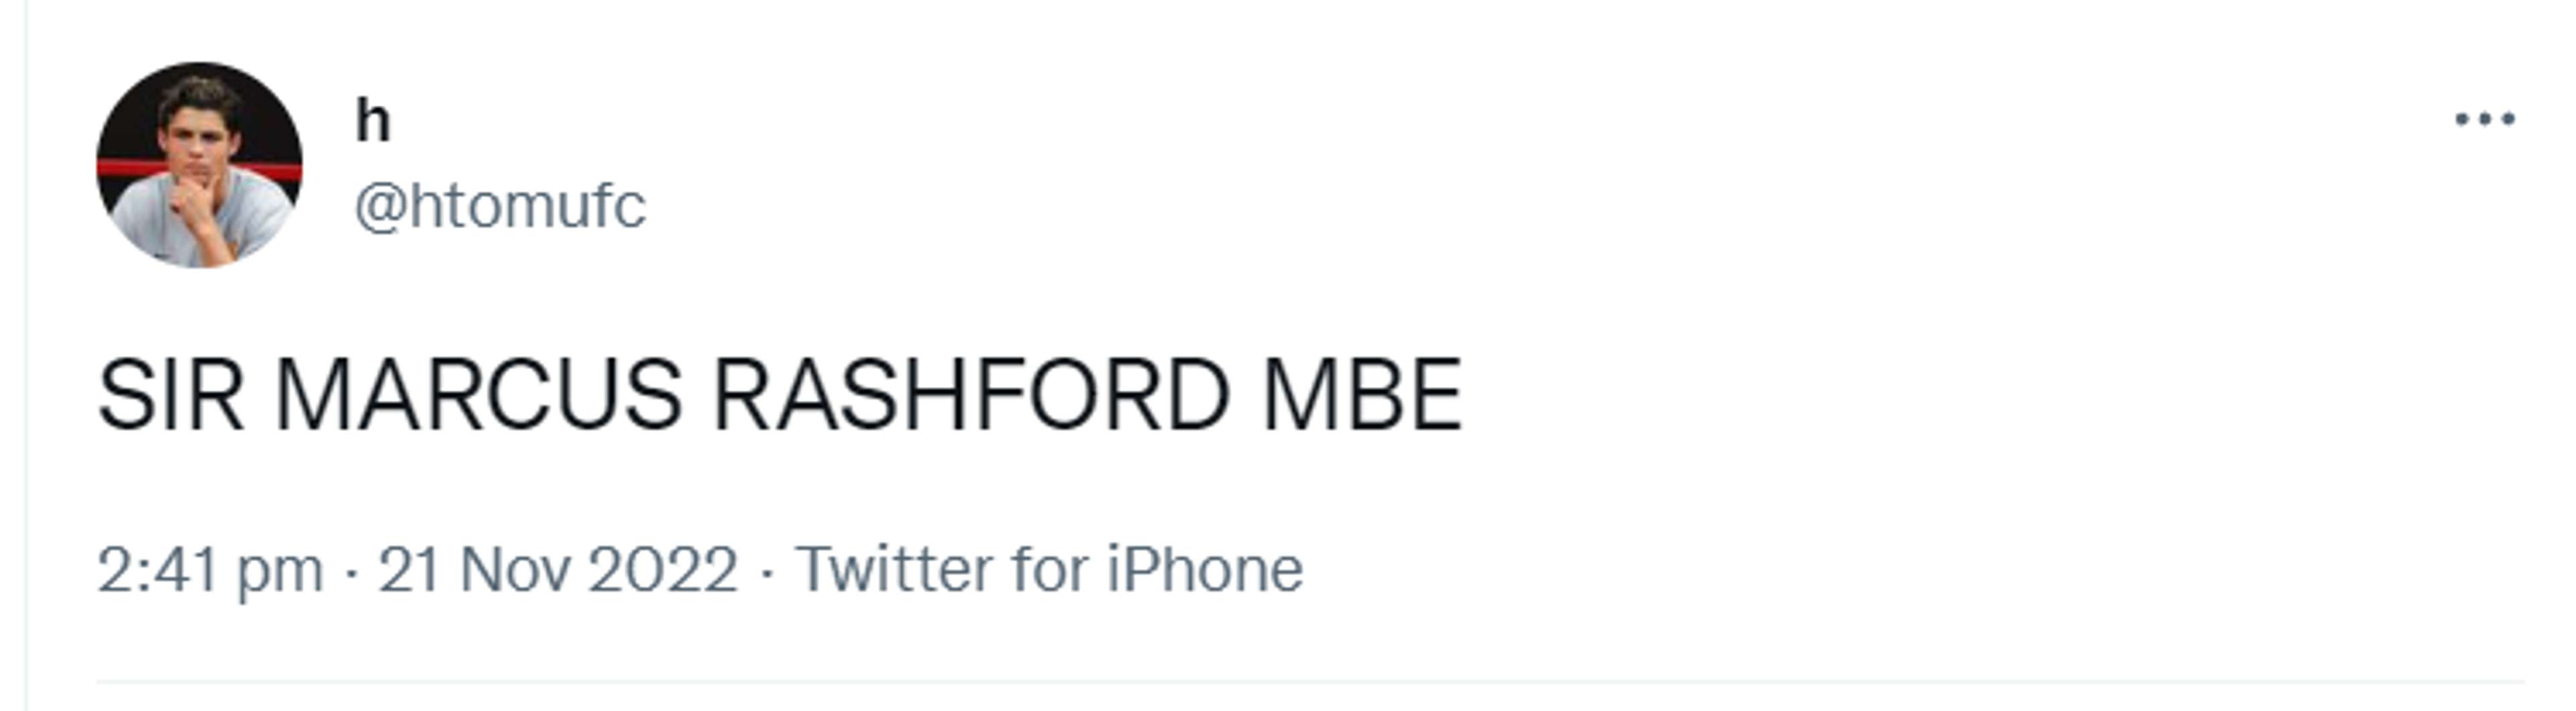 Rashford MBE tweet